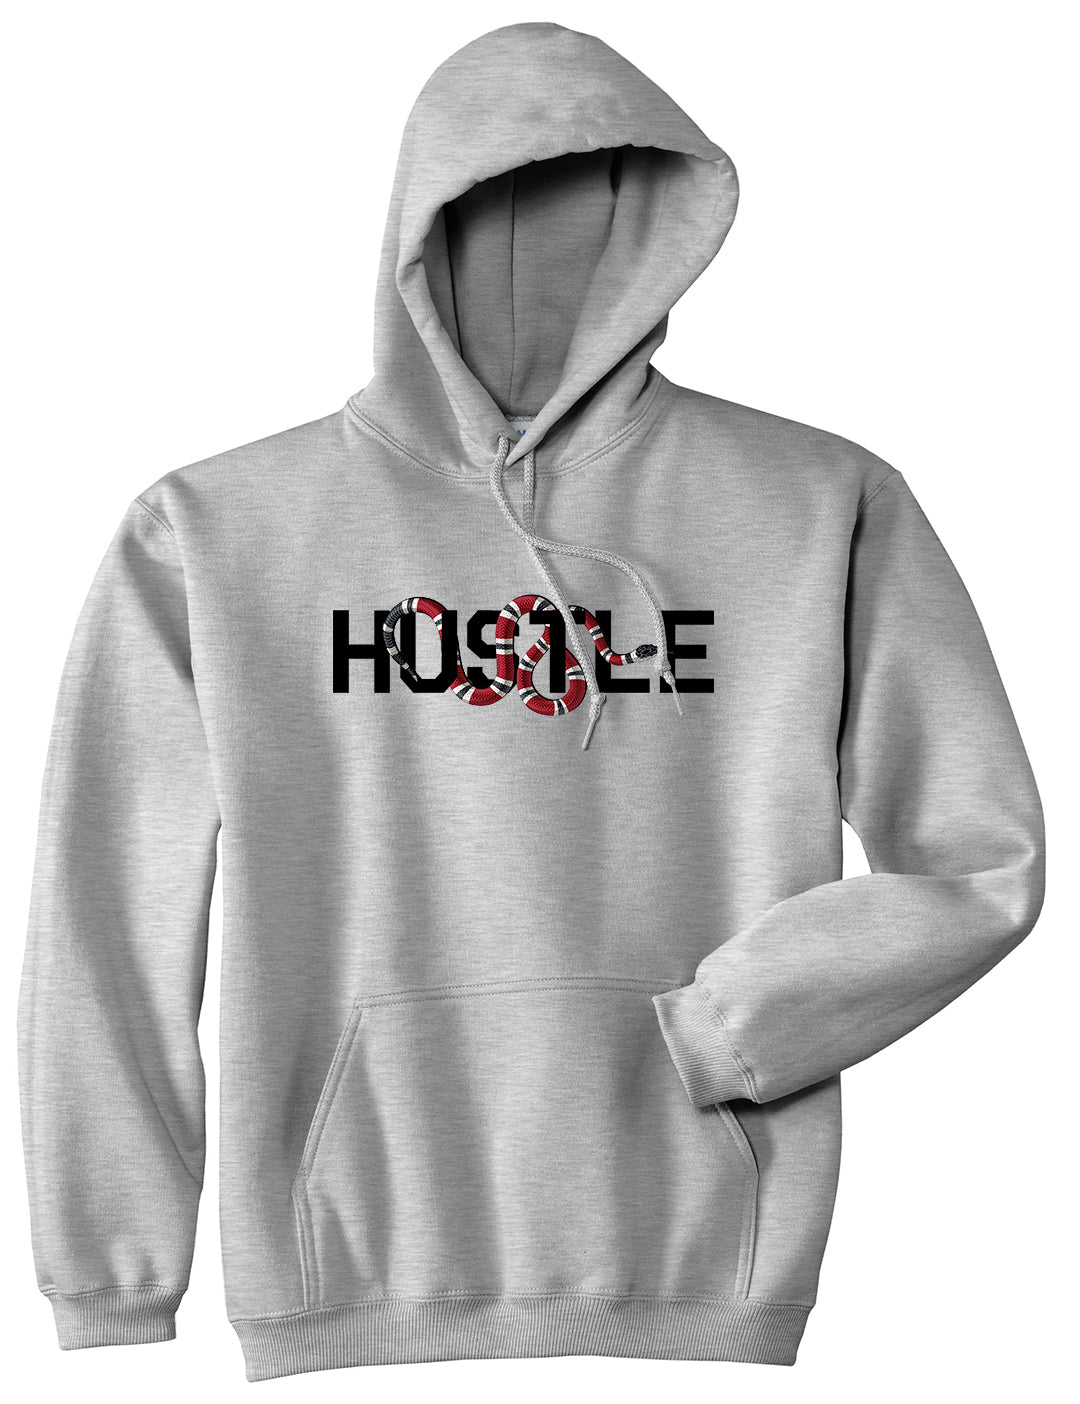 Hustle Snake Mens Pullover Hoodie Grey by Kings Of NY